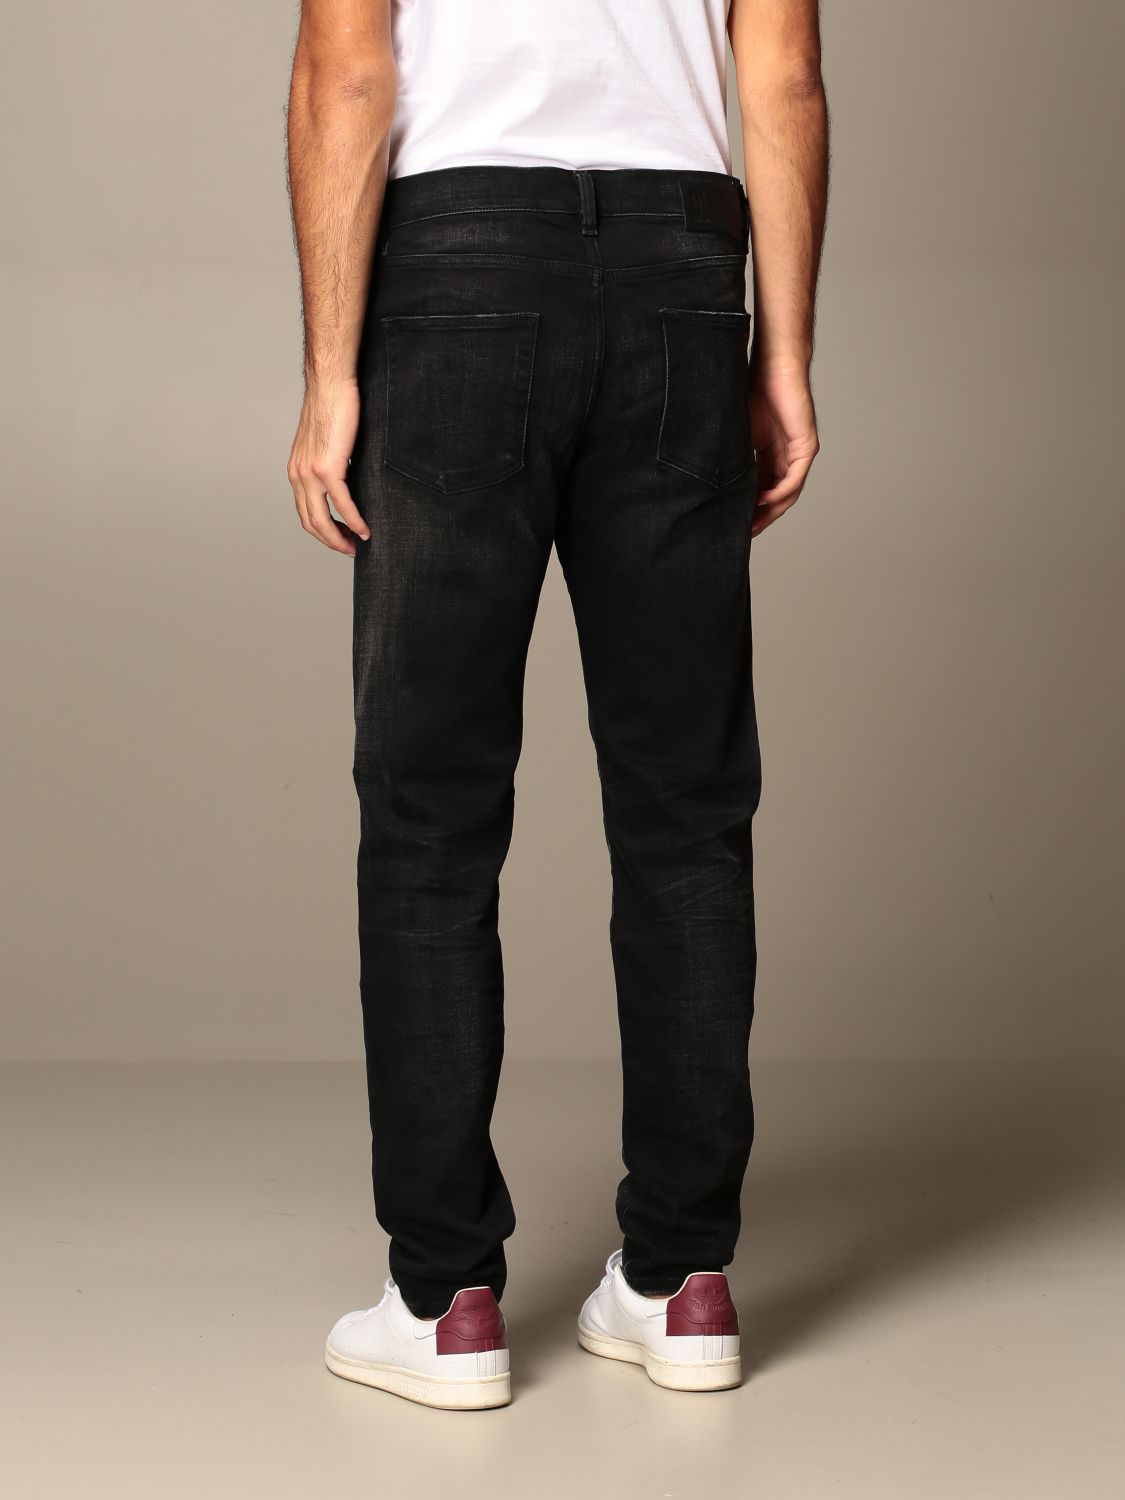 Overleven Lucht bolvormig DIESEL: D-strukt jeans in slim used denim - Black | Diesel jeans 00SPW5  0098B online on GIGLIO.COM